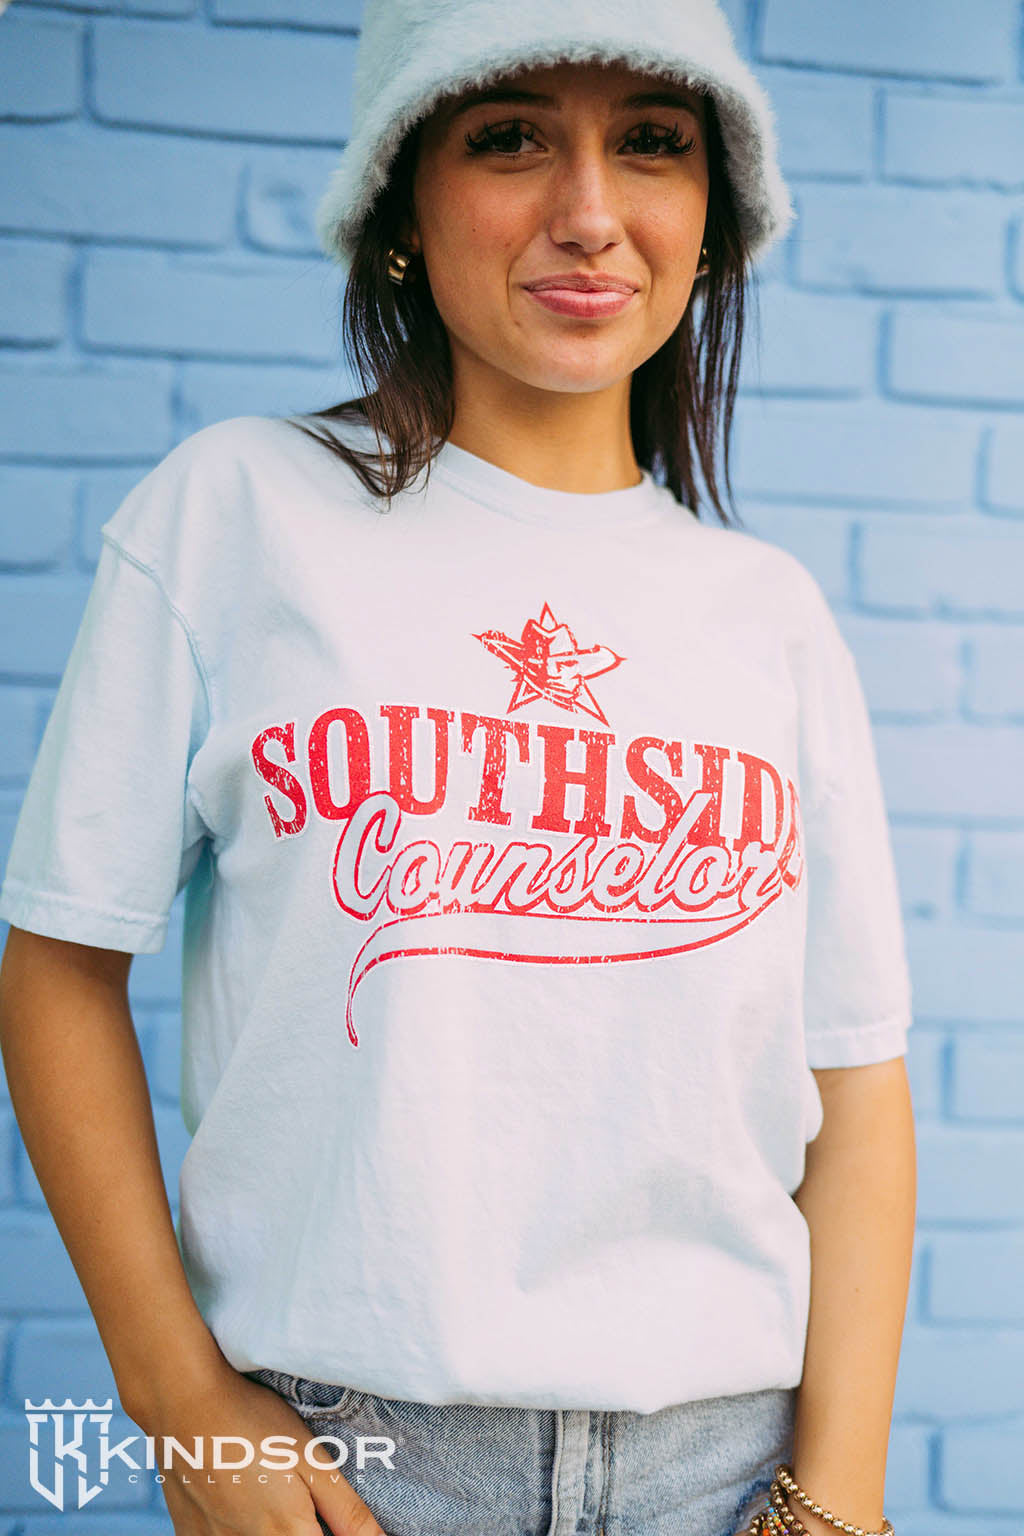 Southside High School Counselor Tshirt